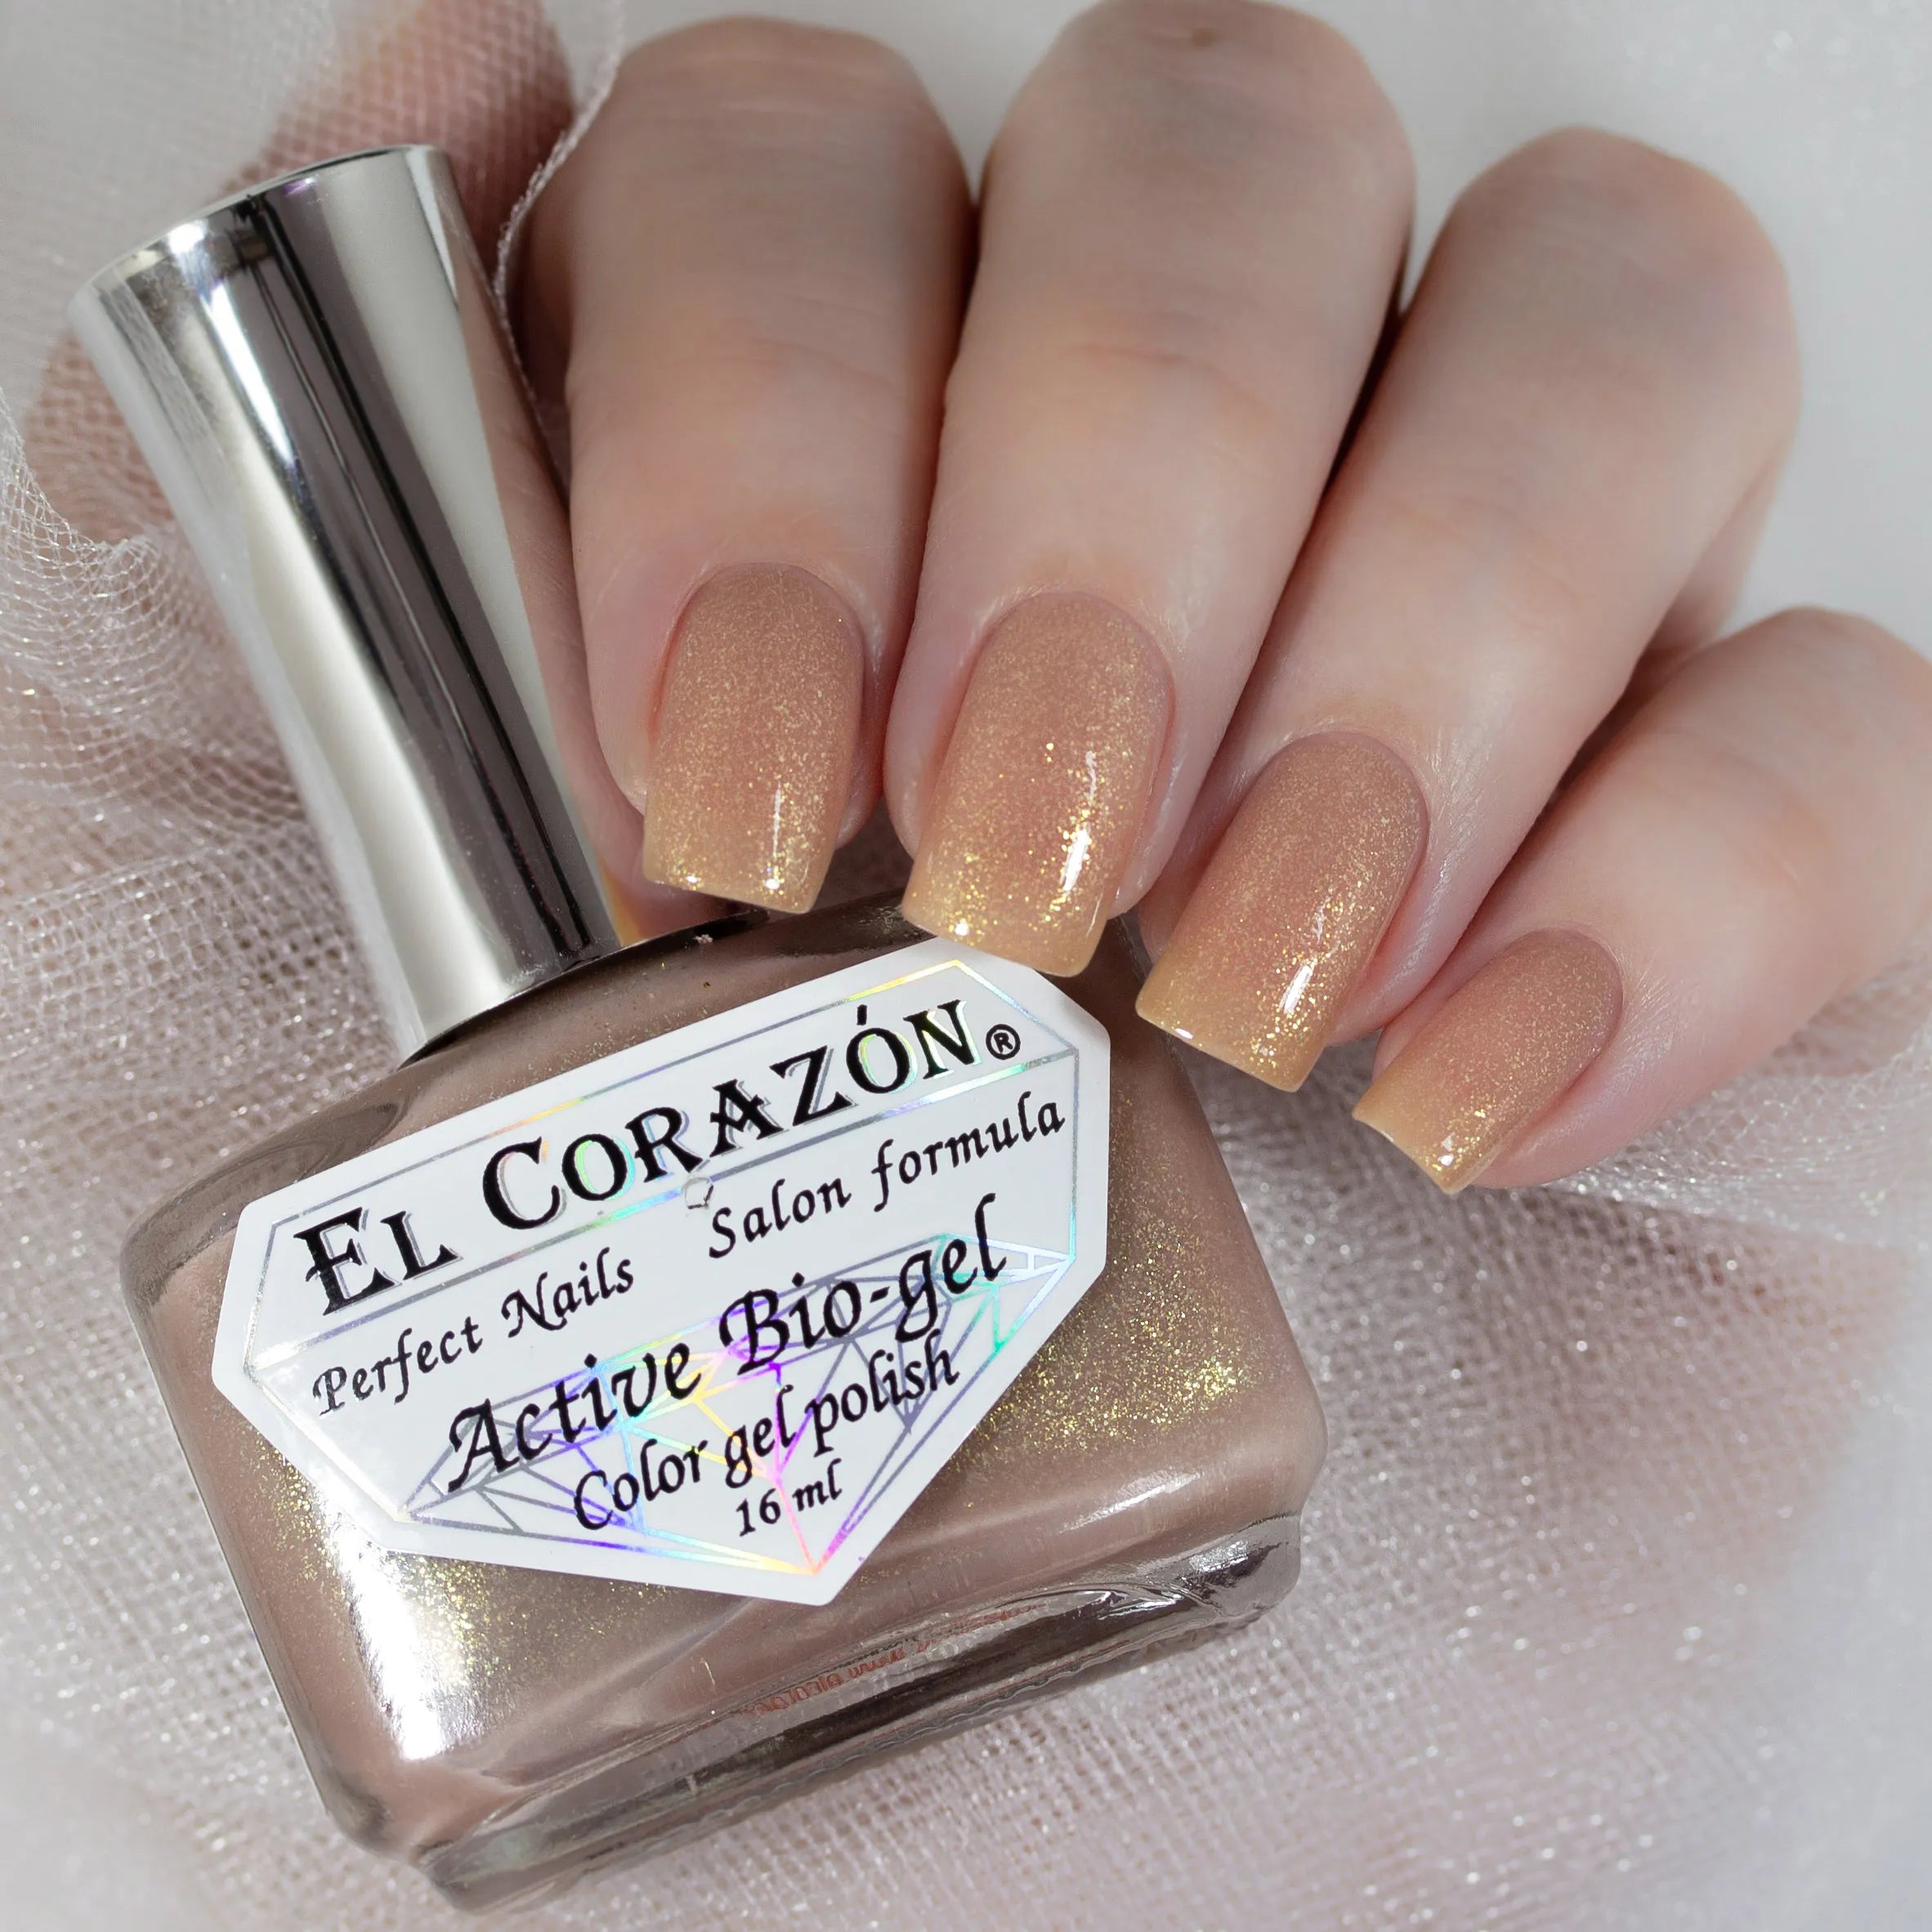 New colors of El Corazon Active Bio-gel nail polishes: №423/1071 -  №423/1074!